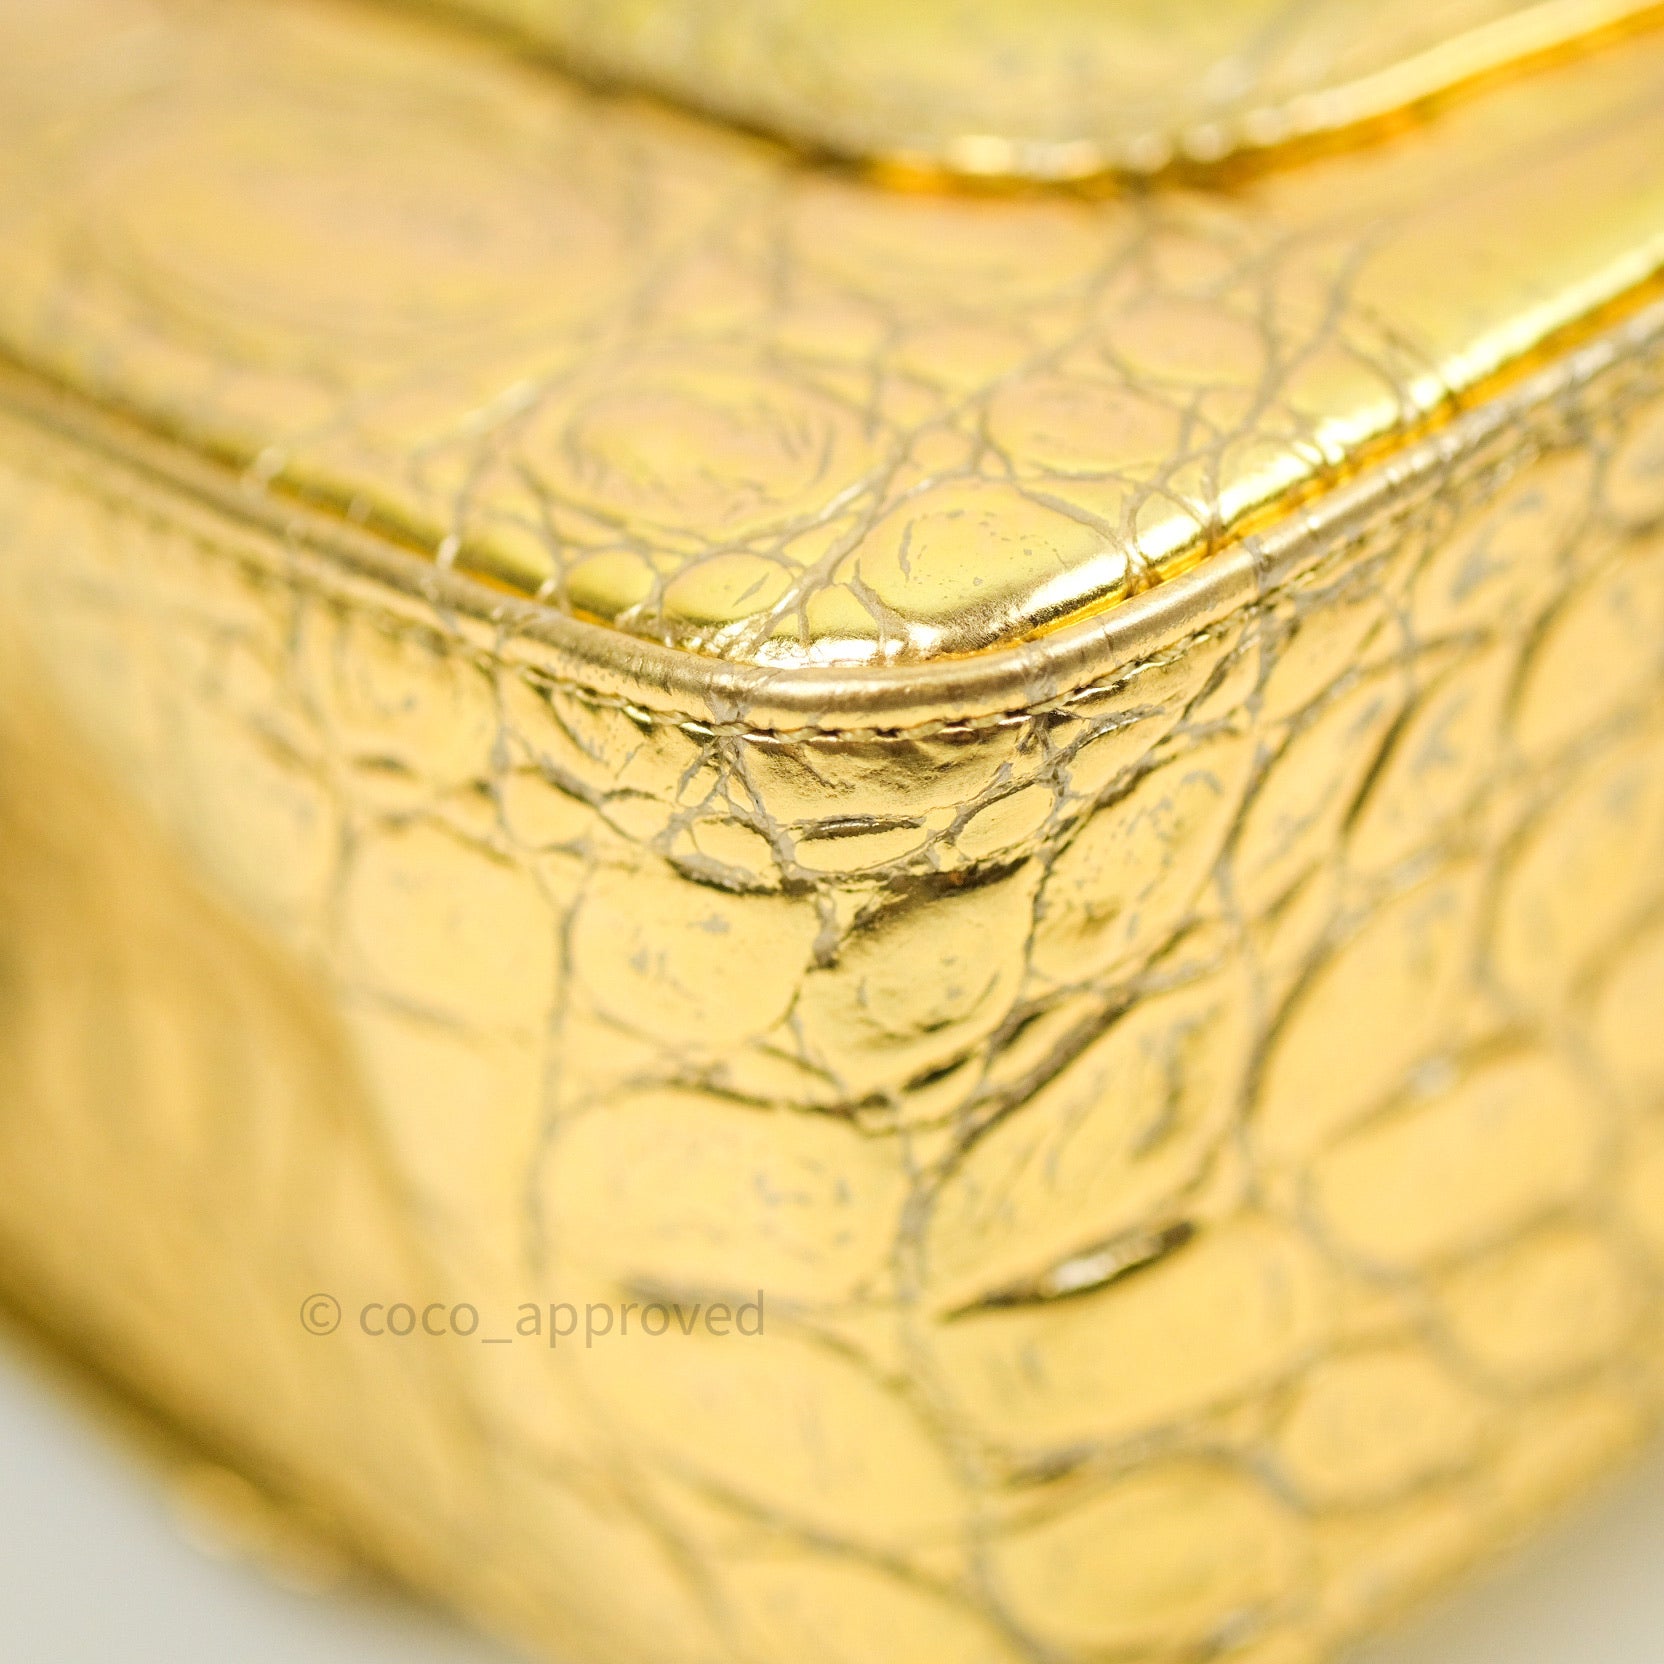 Chanel Metallic Gold Crocodile Embossed Gabrielle Medium Bag – The